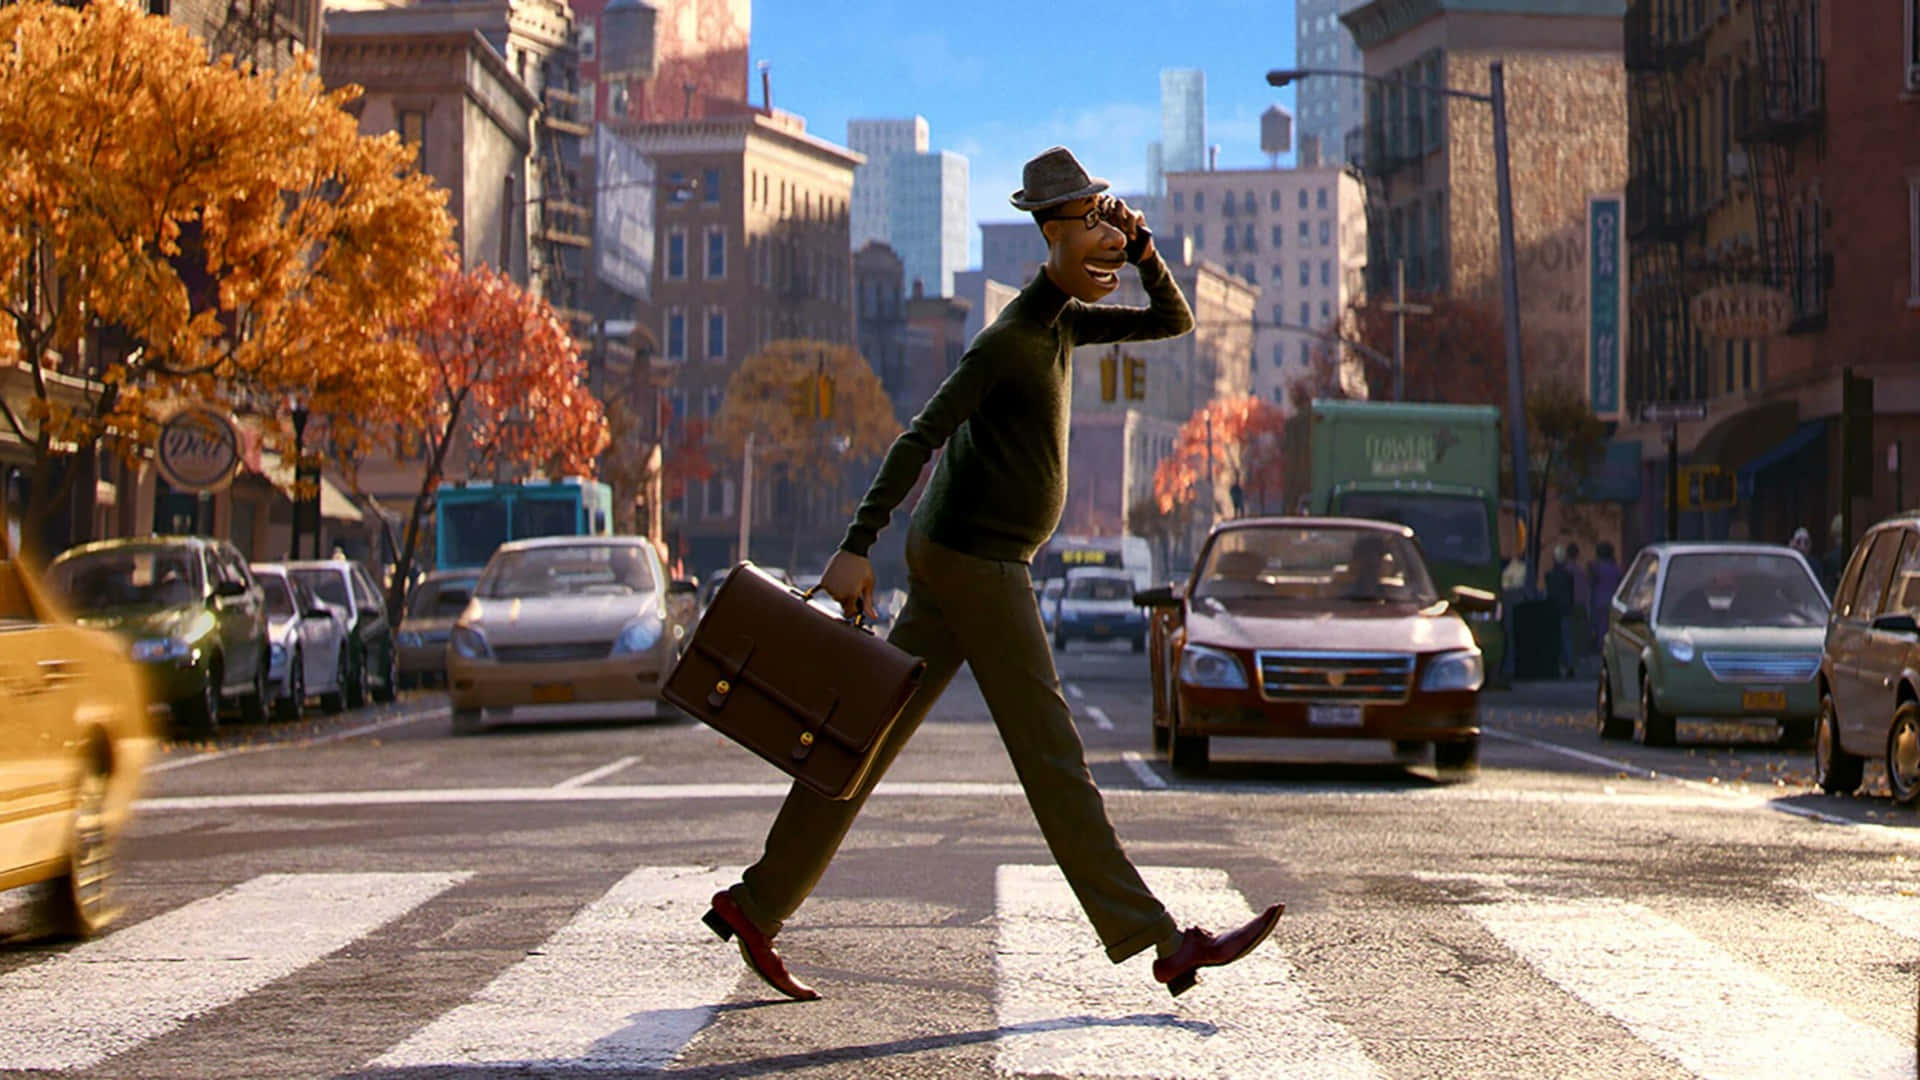 Bringing brilliance to life: Pixar Animation Studios